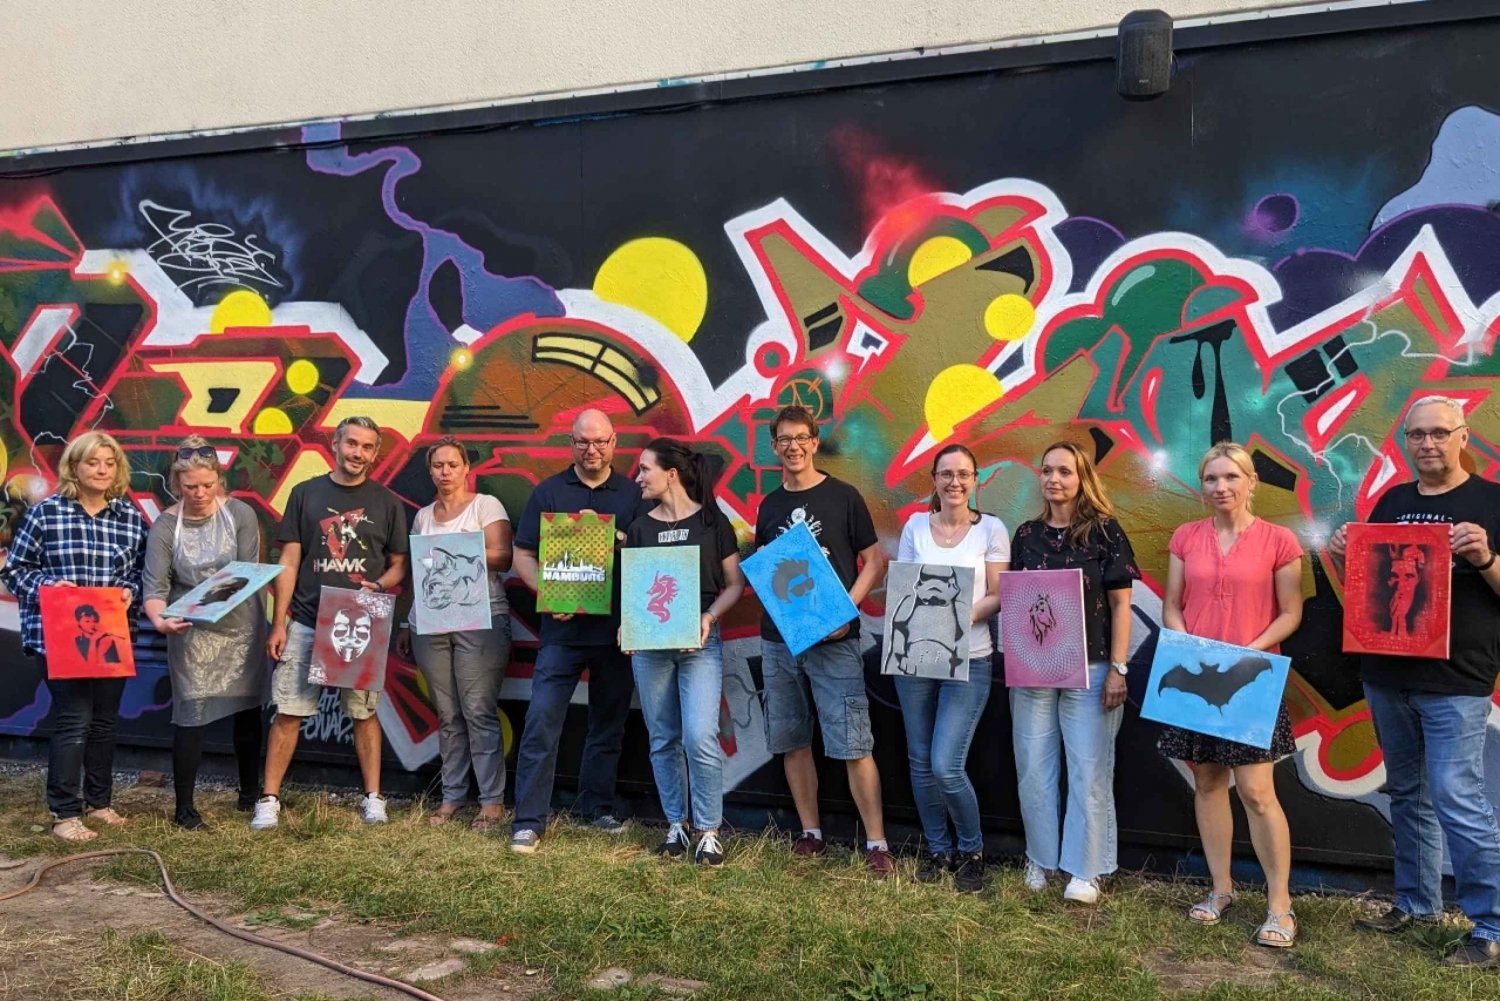 Street Art Workshop & Tour - Private Group